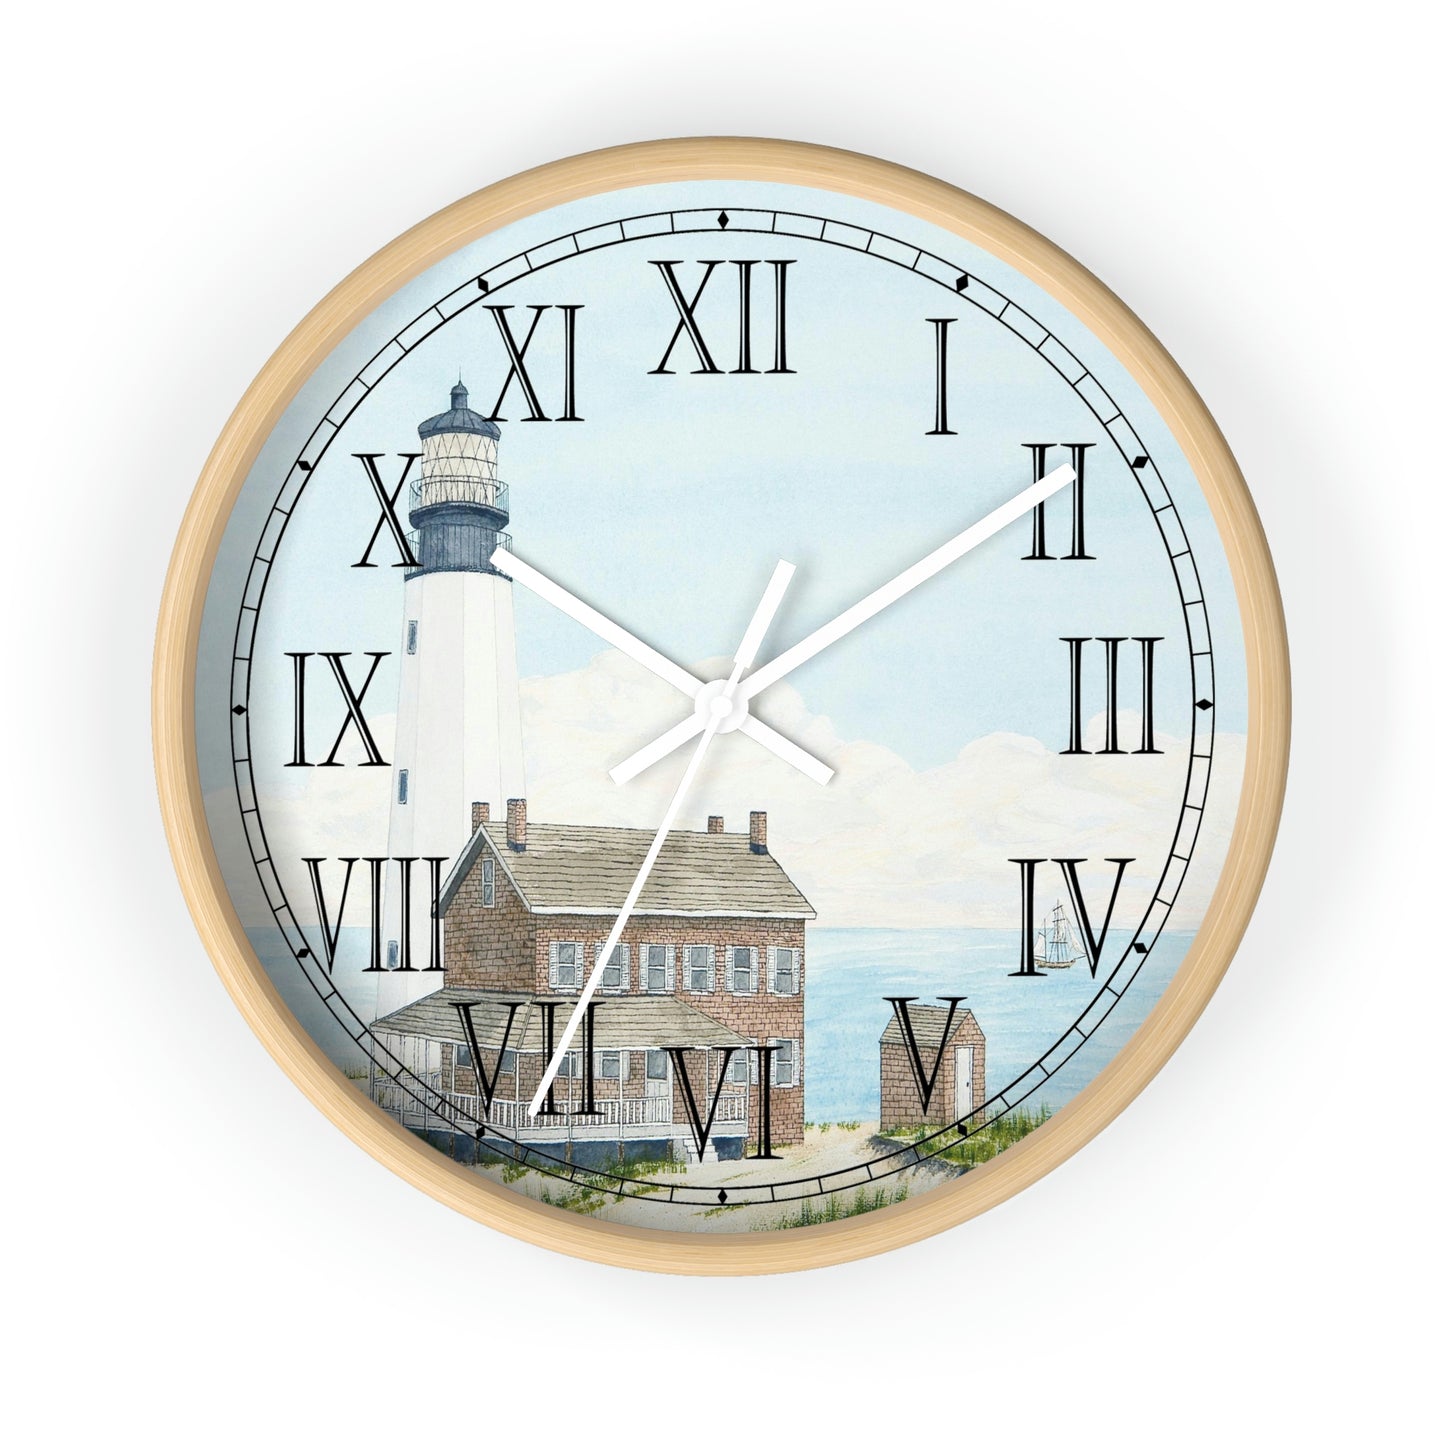 Spirit of Cape Henlopen Roman Numeral Clock